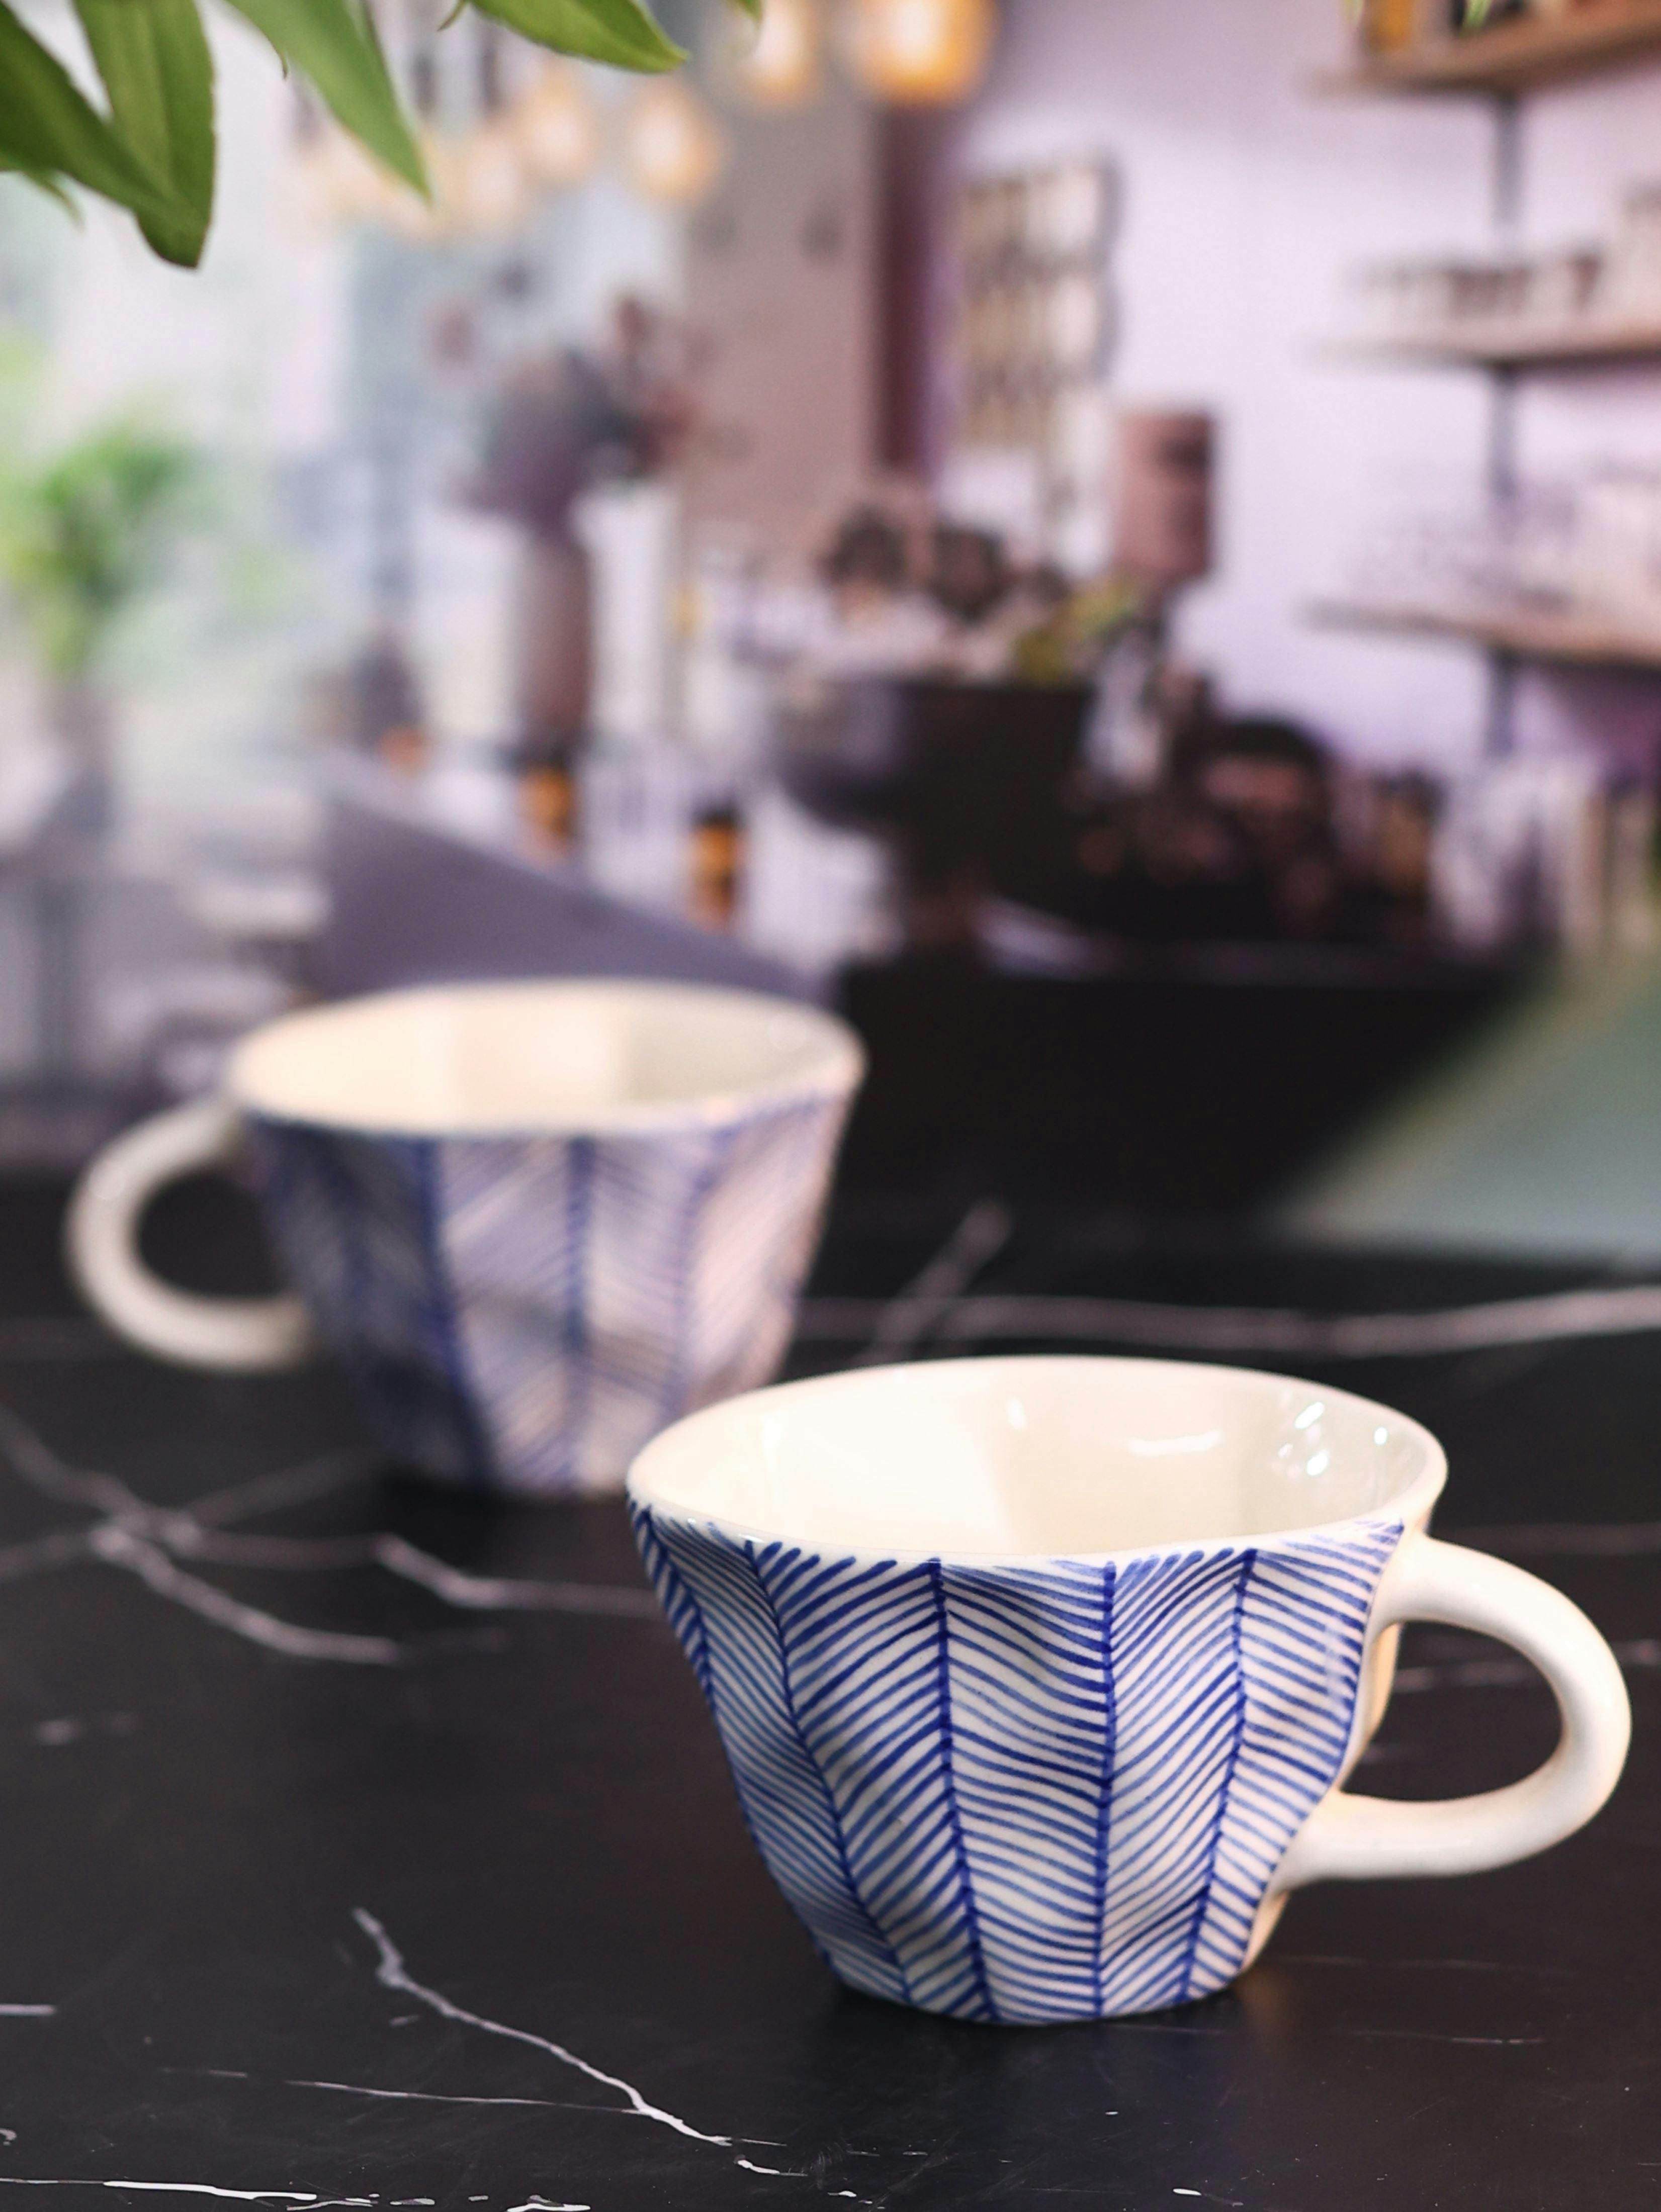 Amalfi Handmade Mug, a product by Olive Home accent